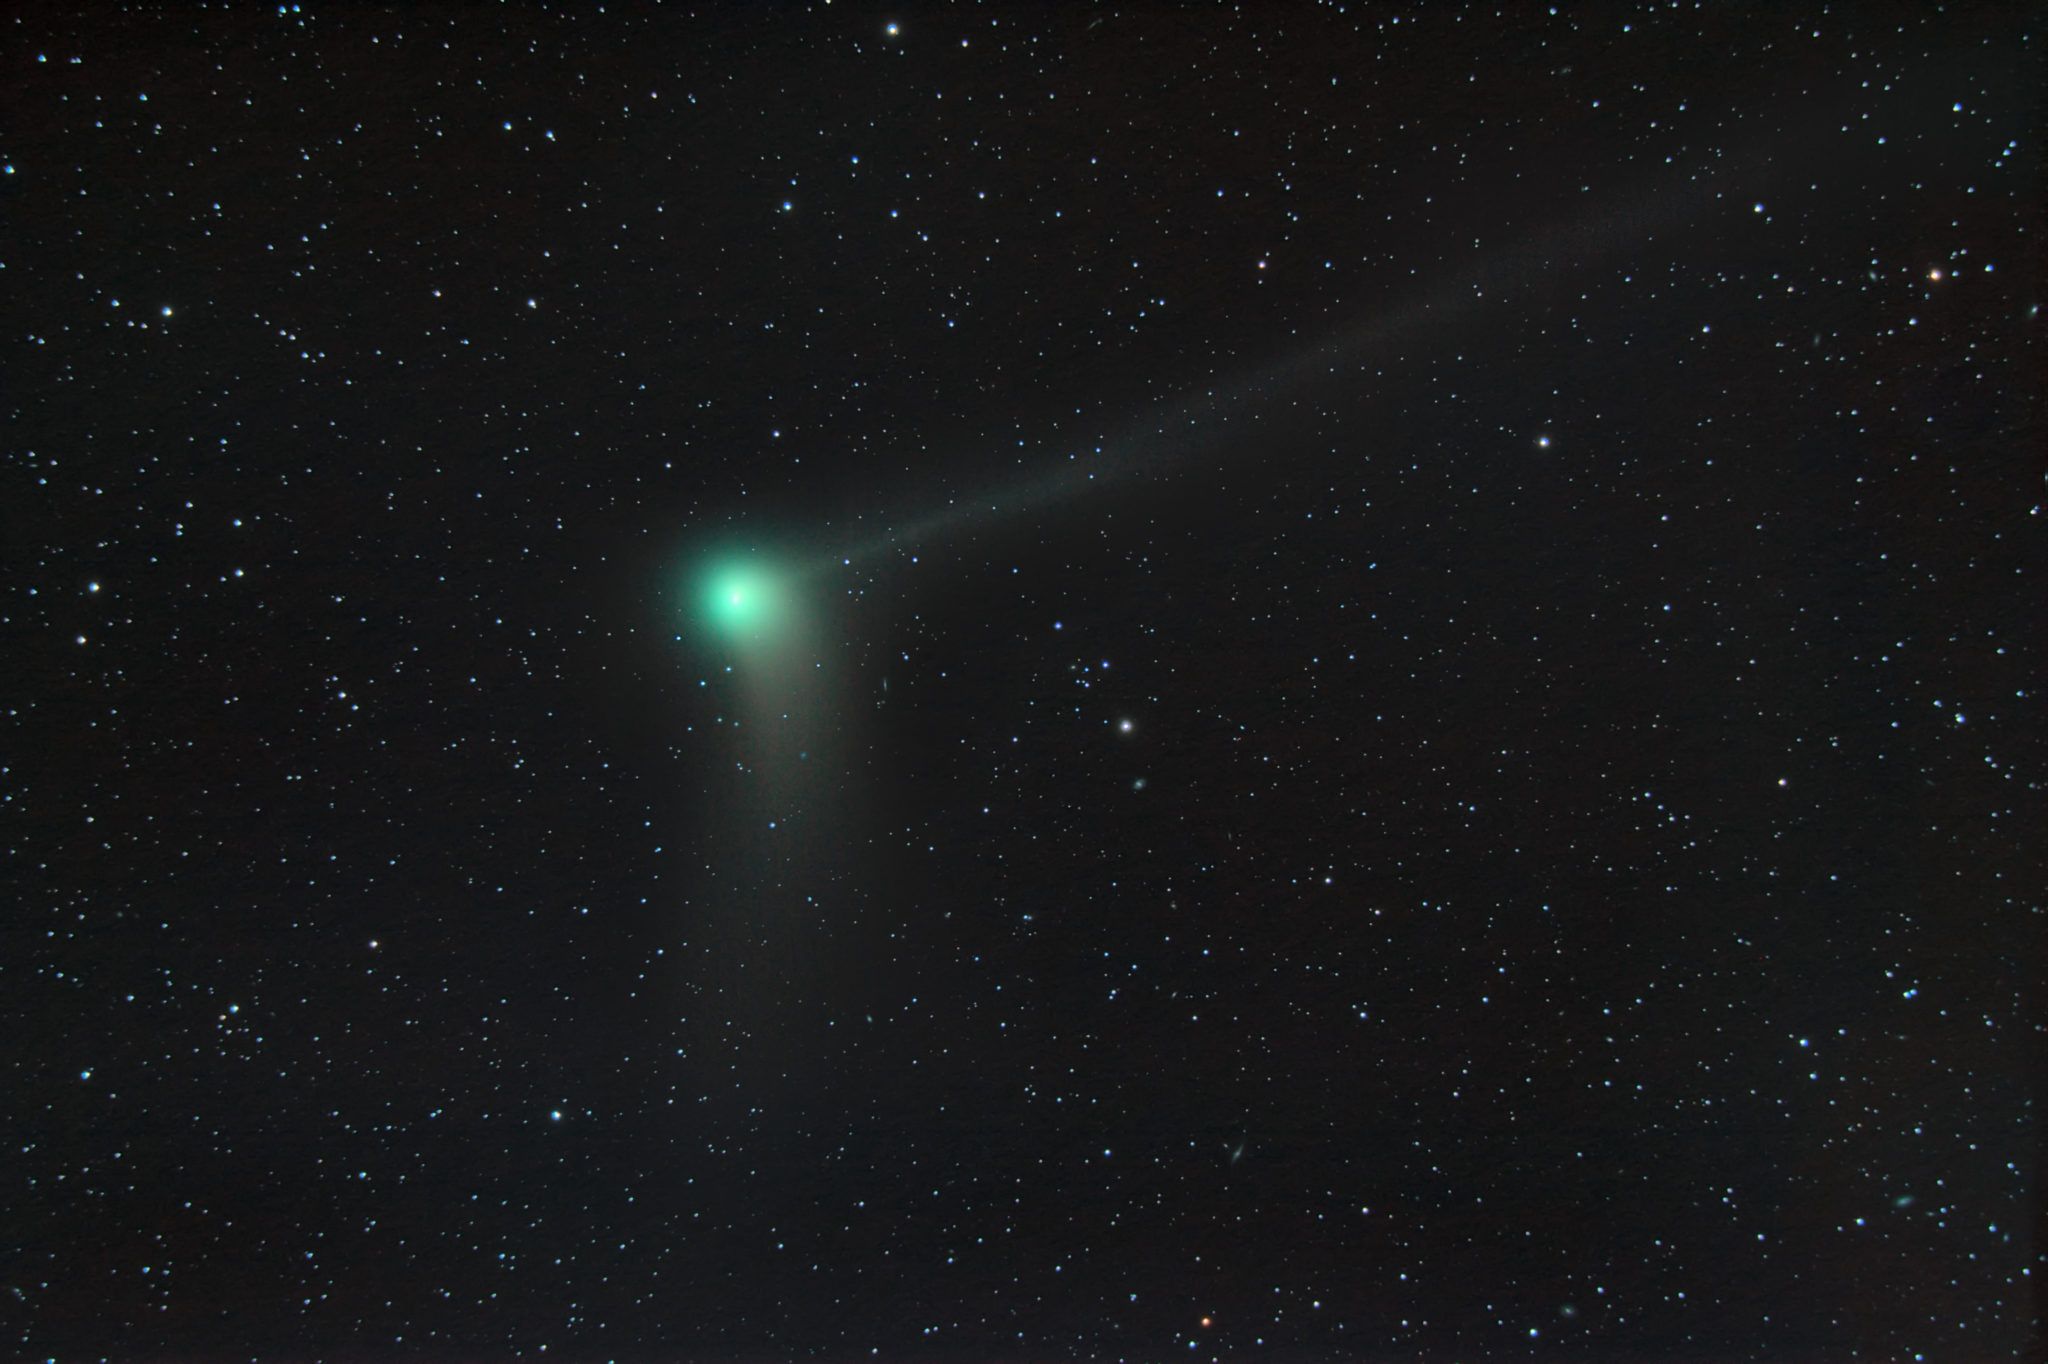 green comet in a night sky